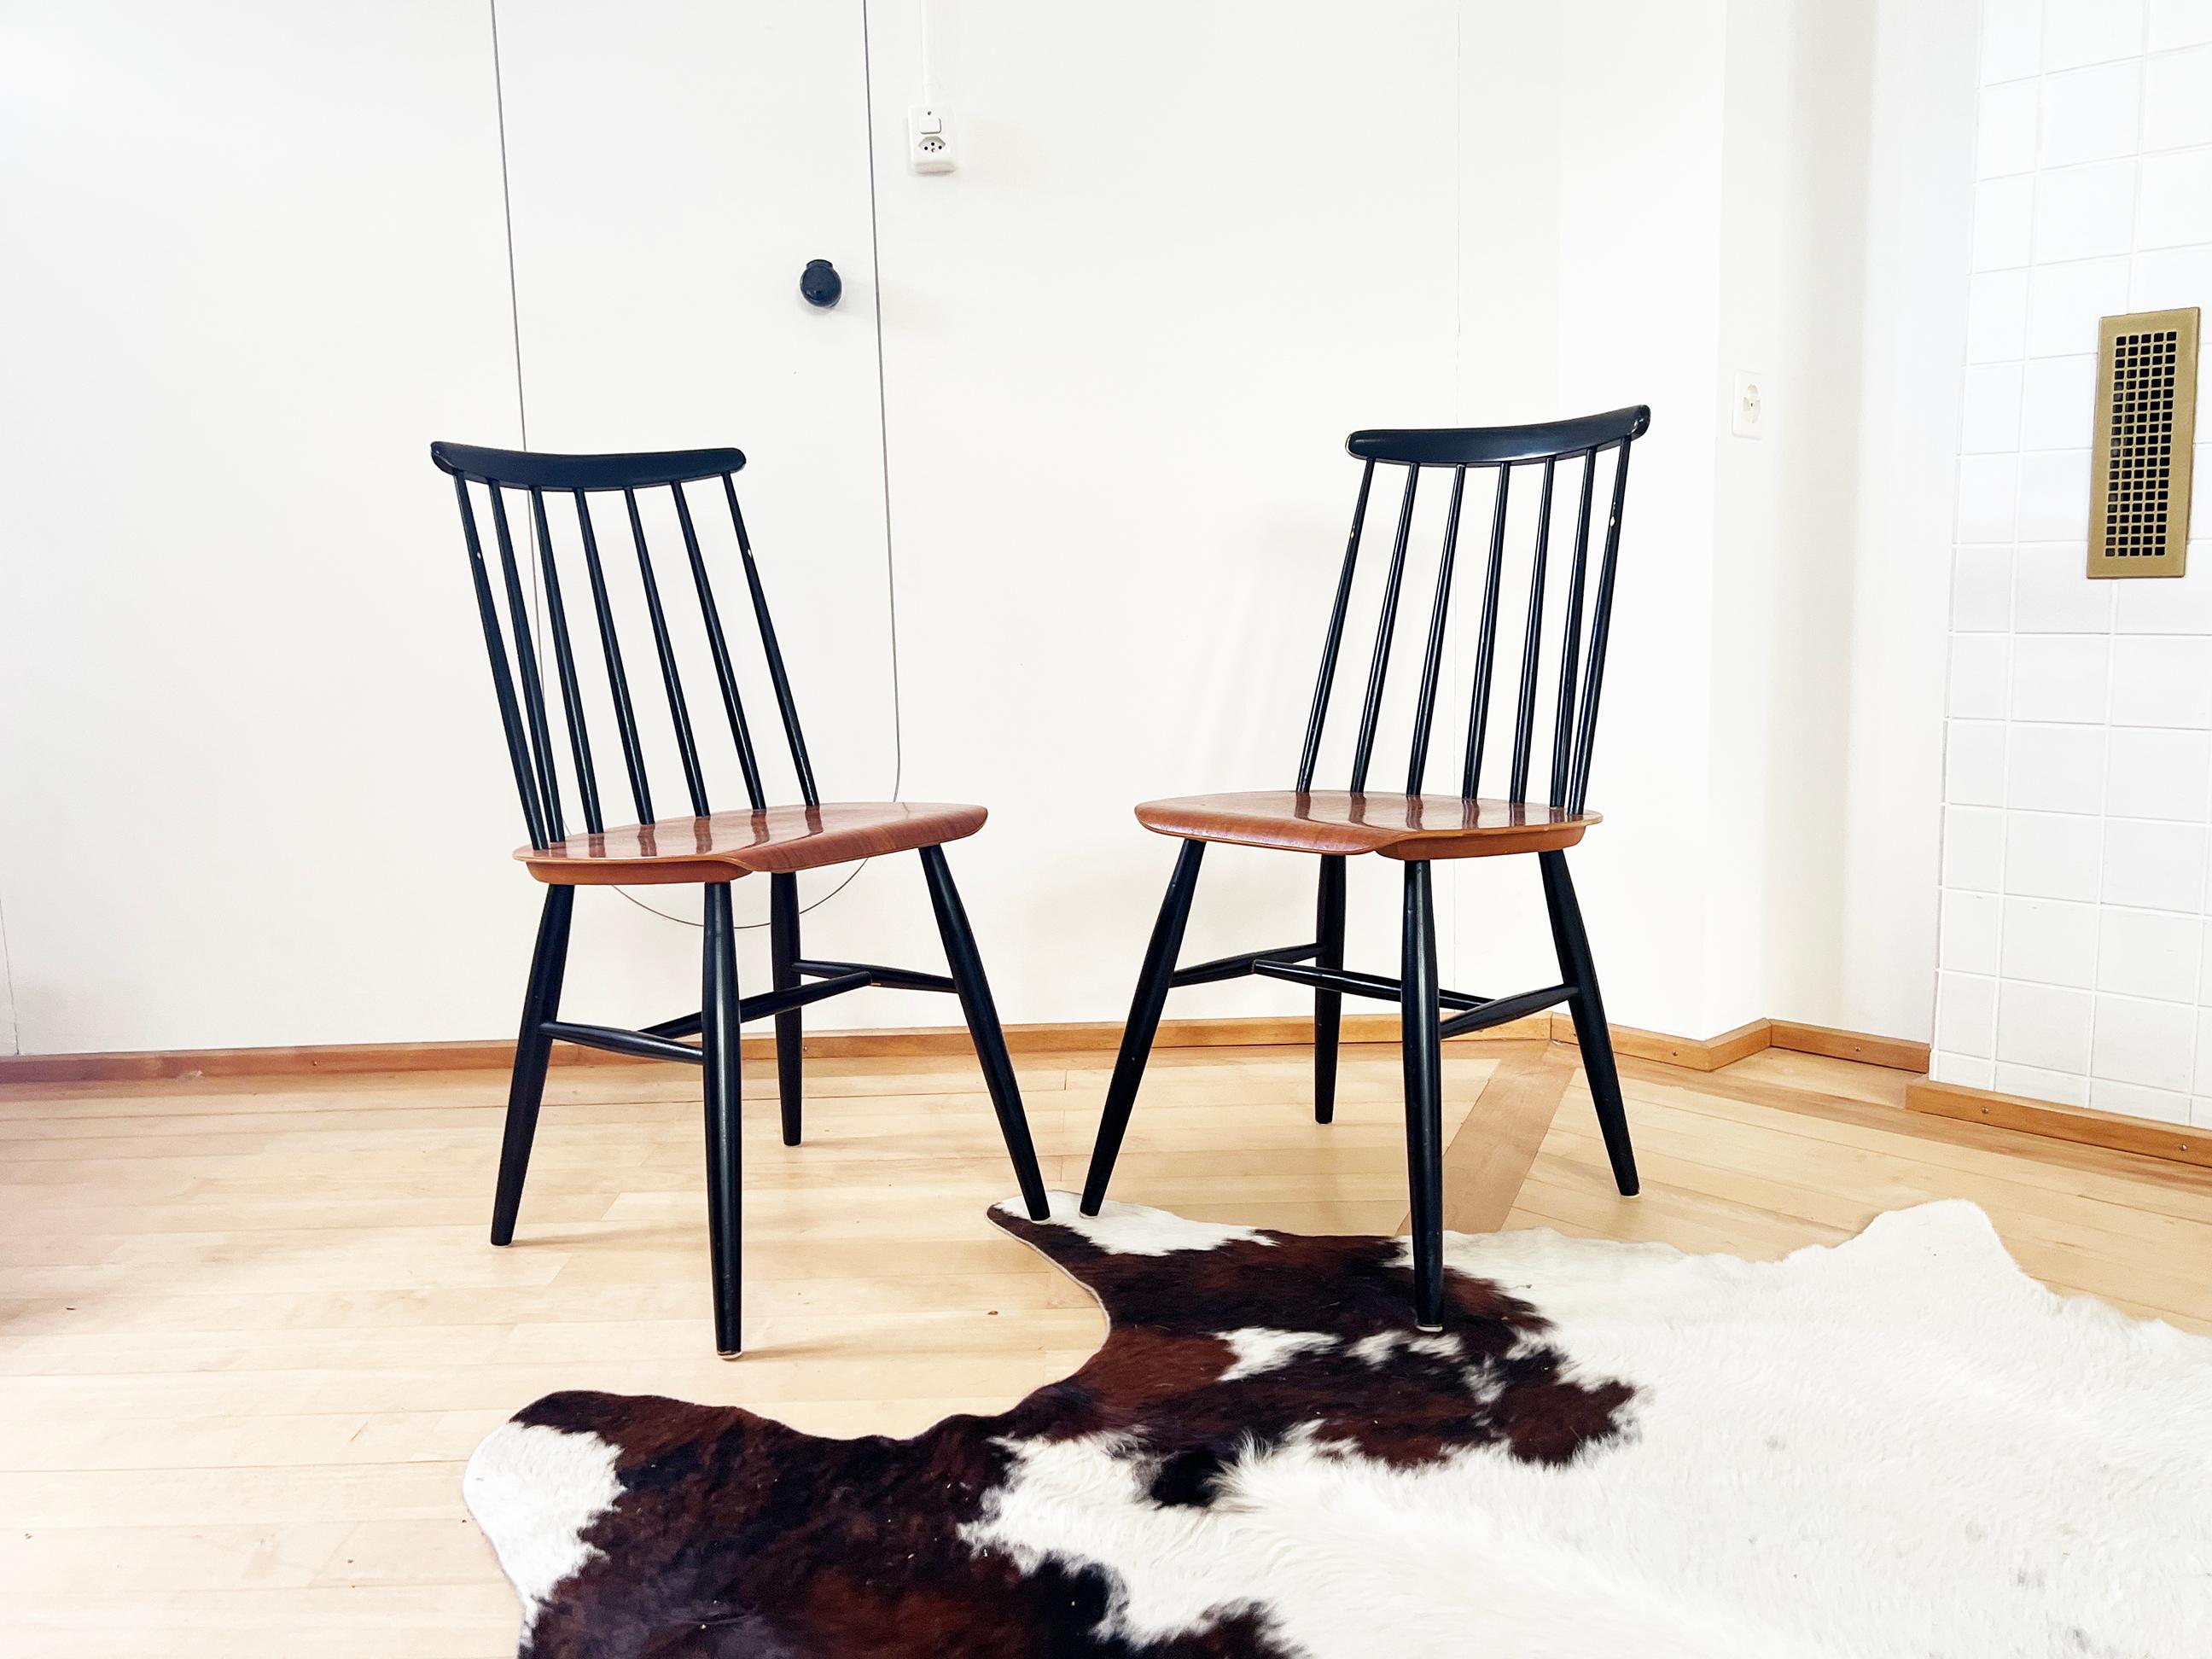 Birch Scandinavian Fannet Spindle Chairs by Tapiovaara w/ Curved Teak Seats 60s - 4pcs For Sale